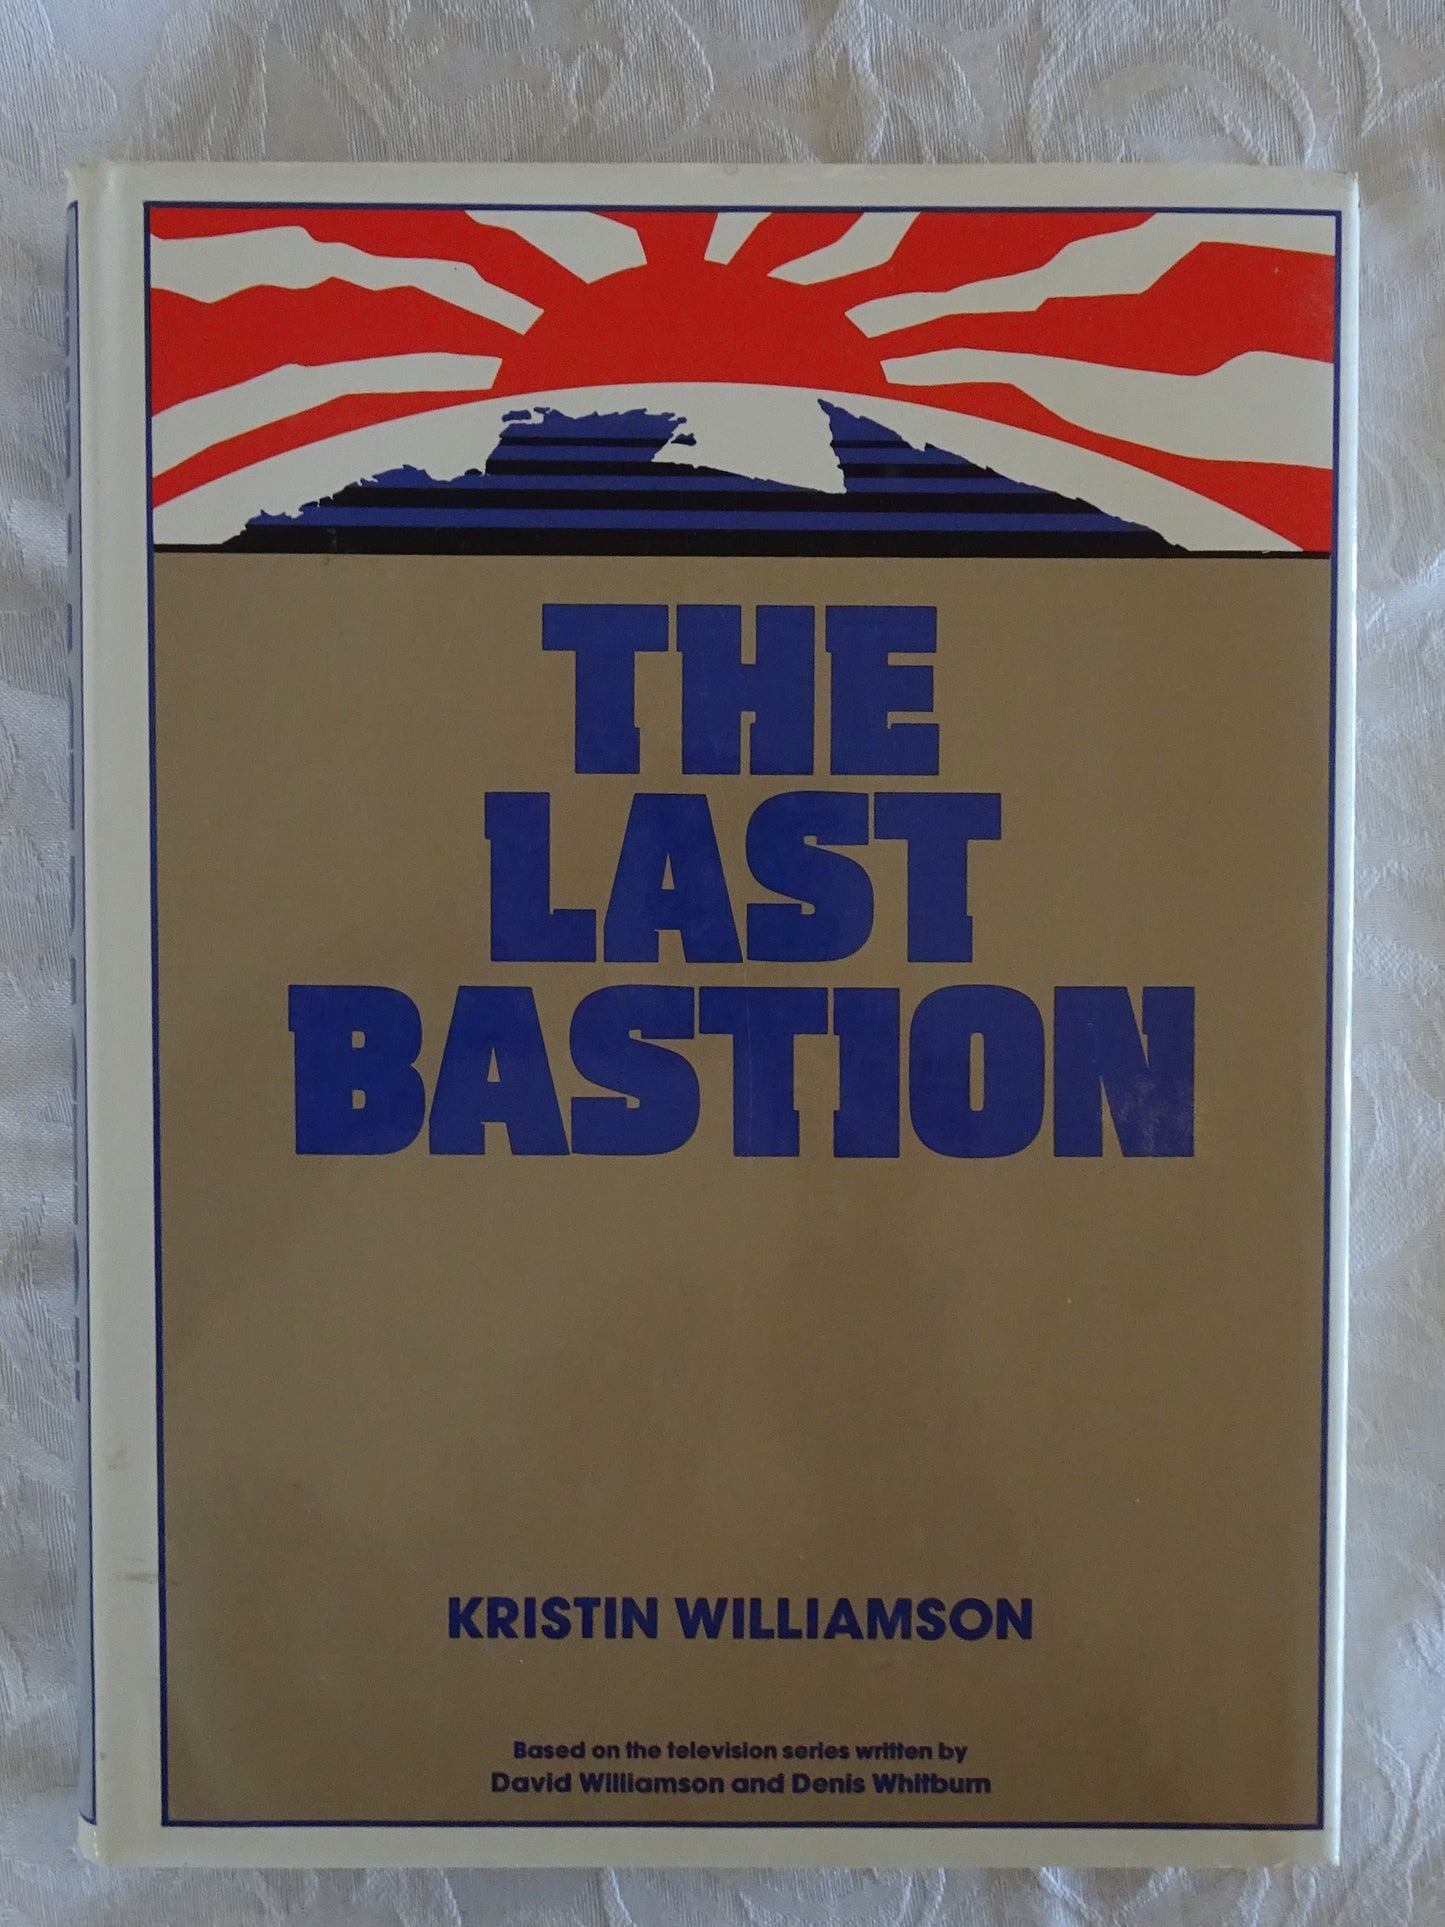 The Last Bastion by Kristin Williamson